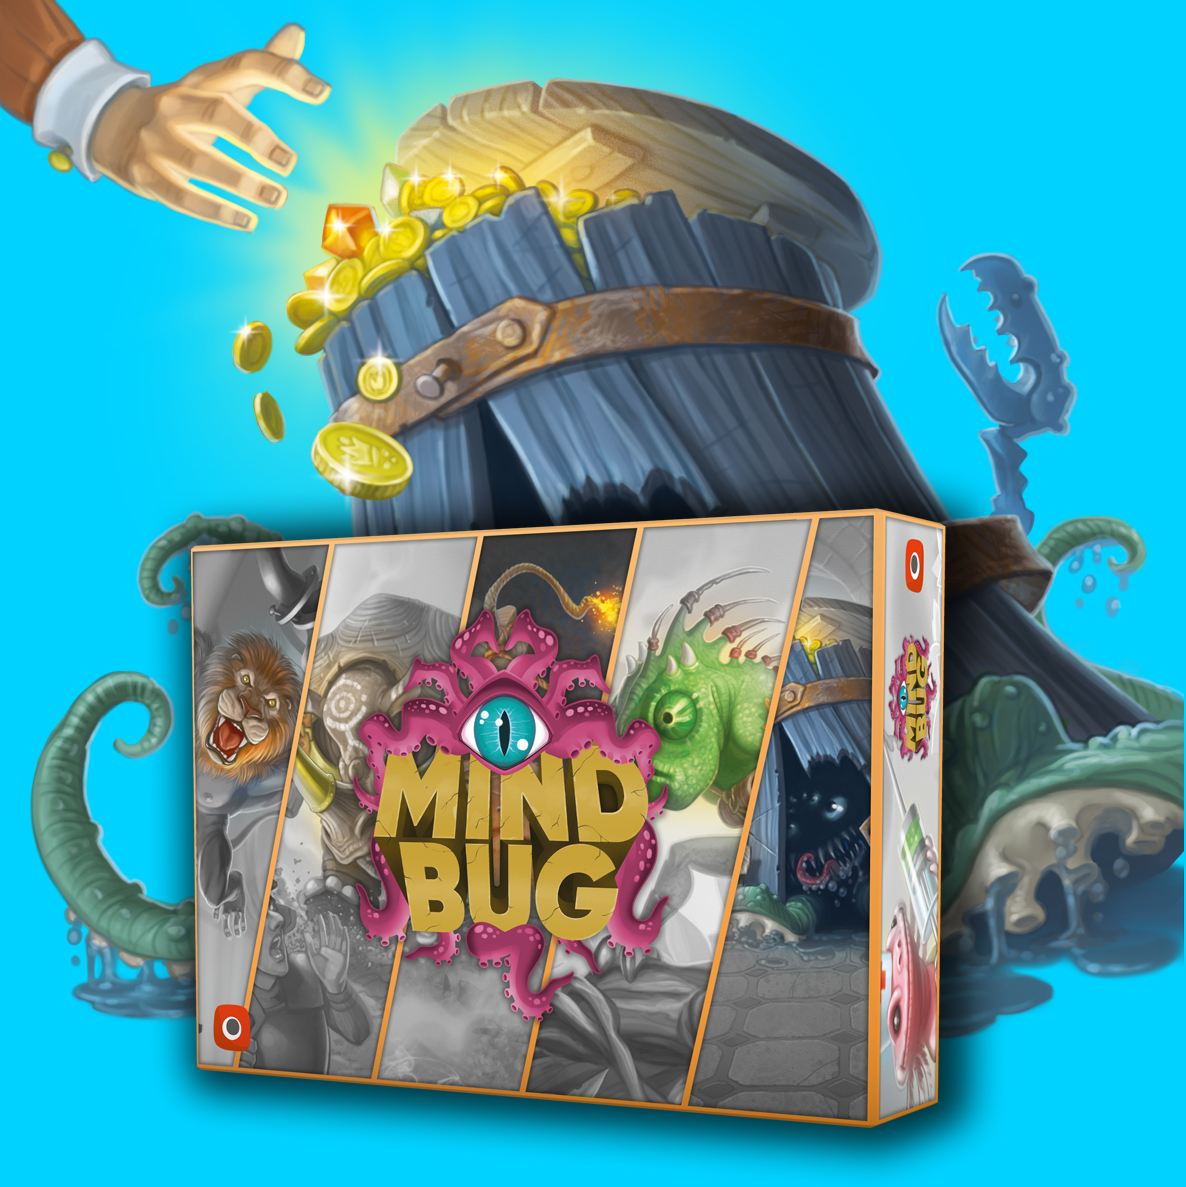 Okładka gry Mindbug